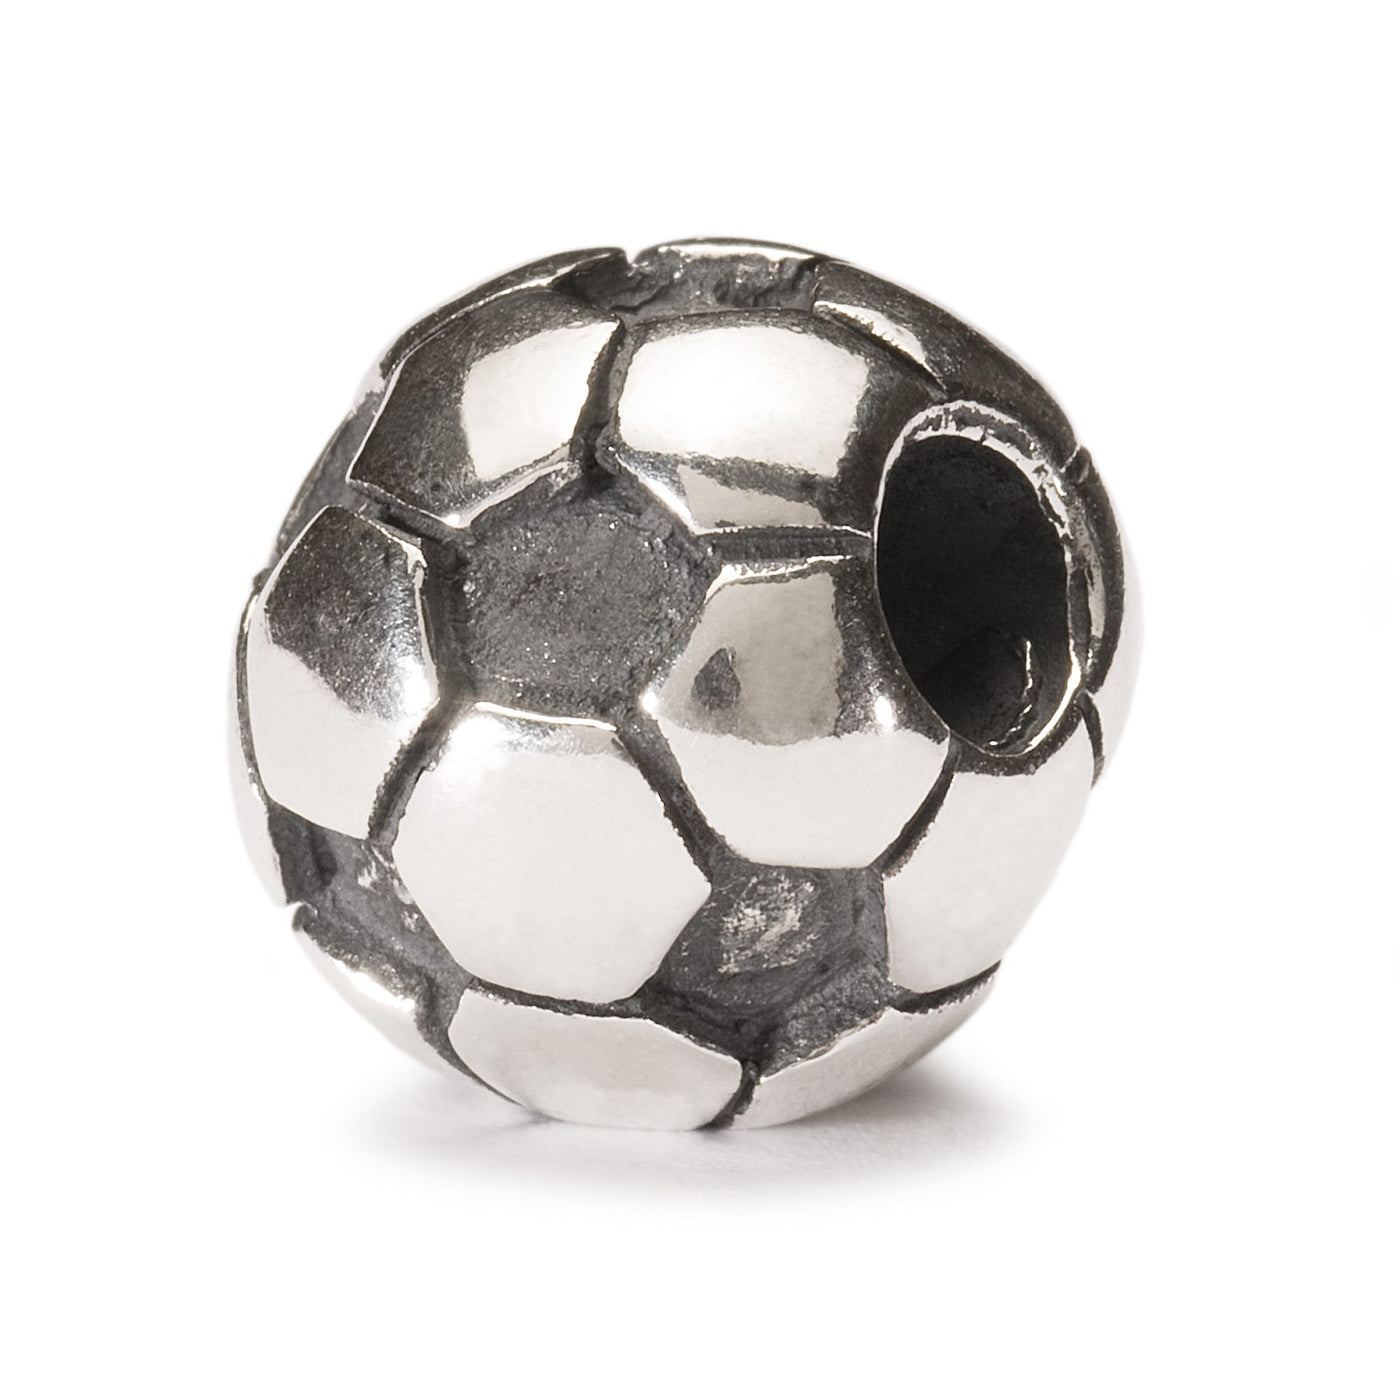 Soccer Ball Bead